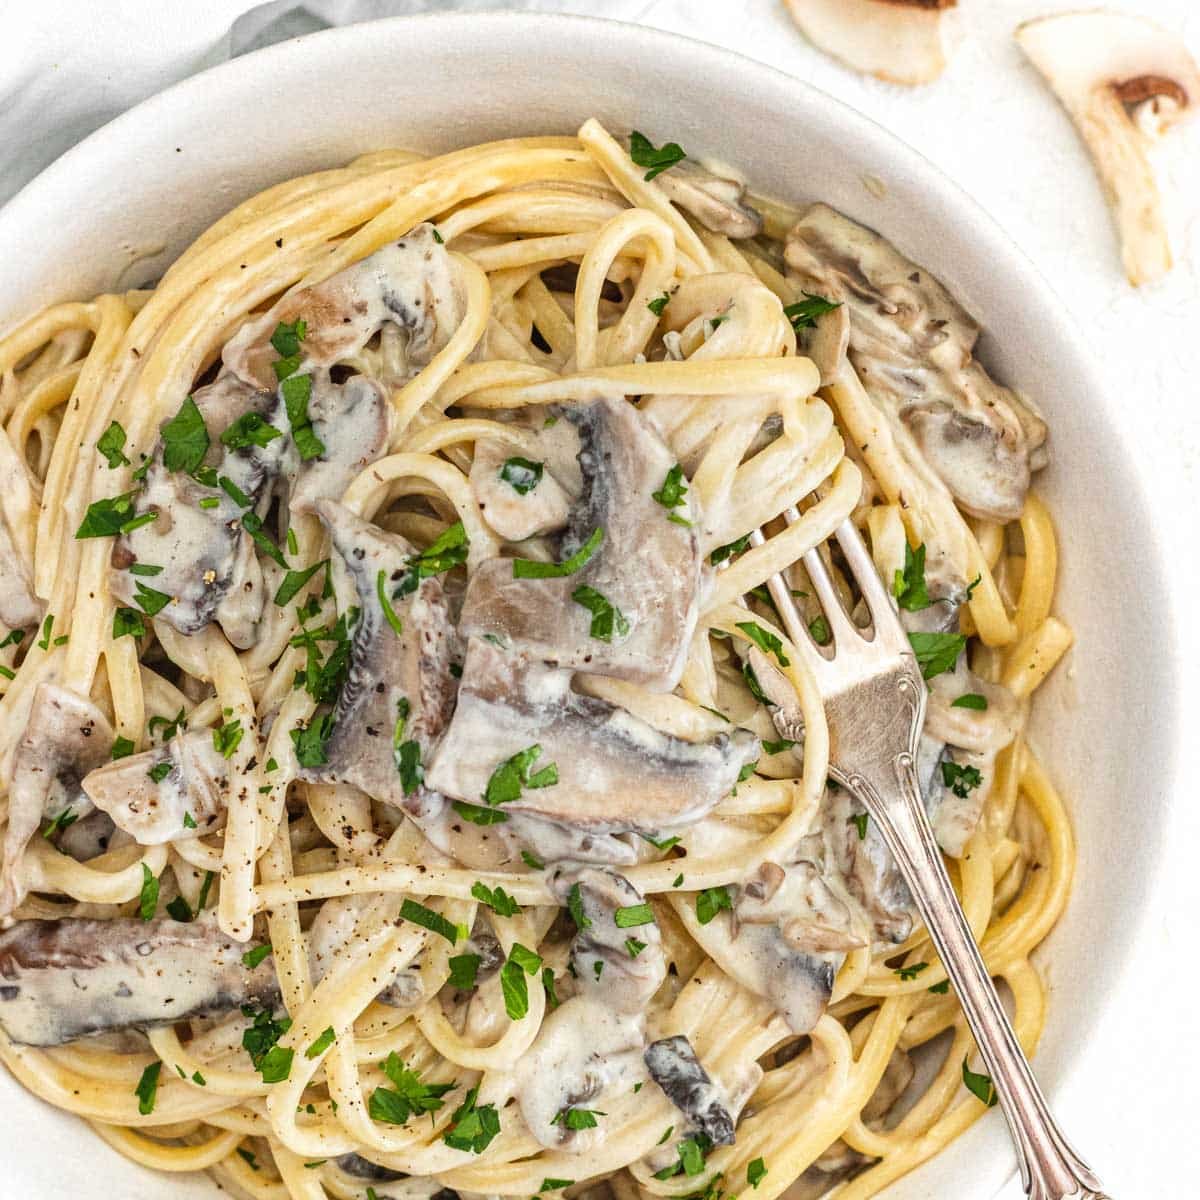 Alfredo mushroom pasta with fork